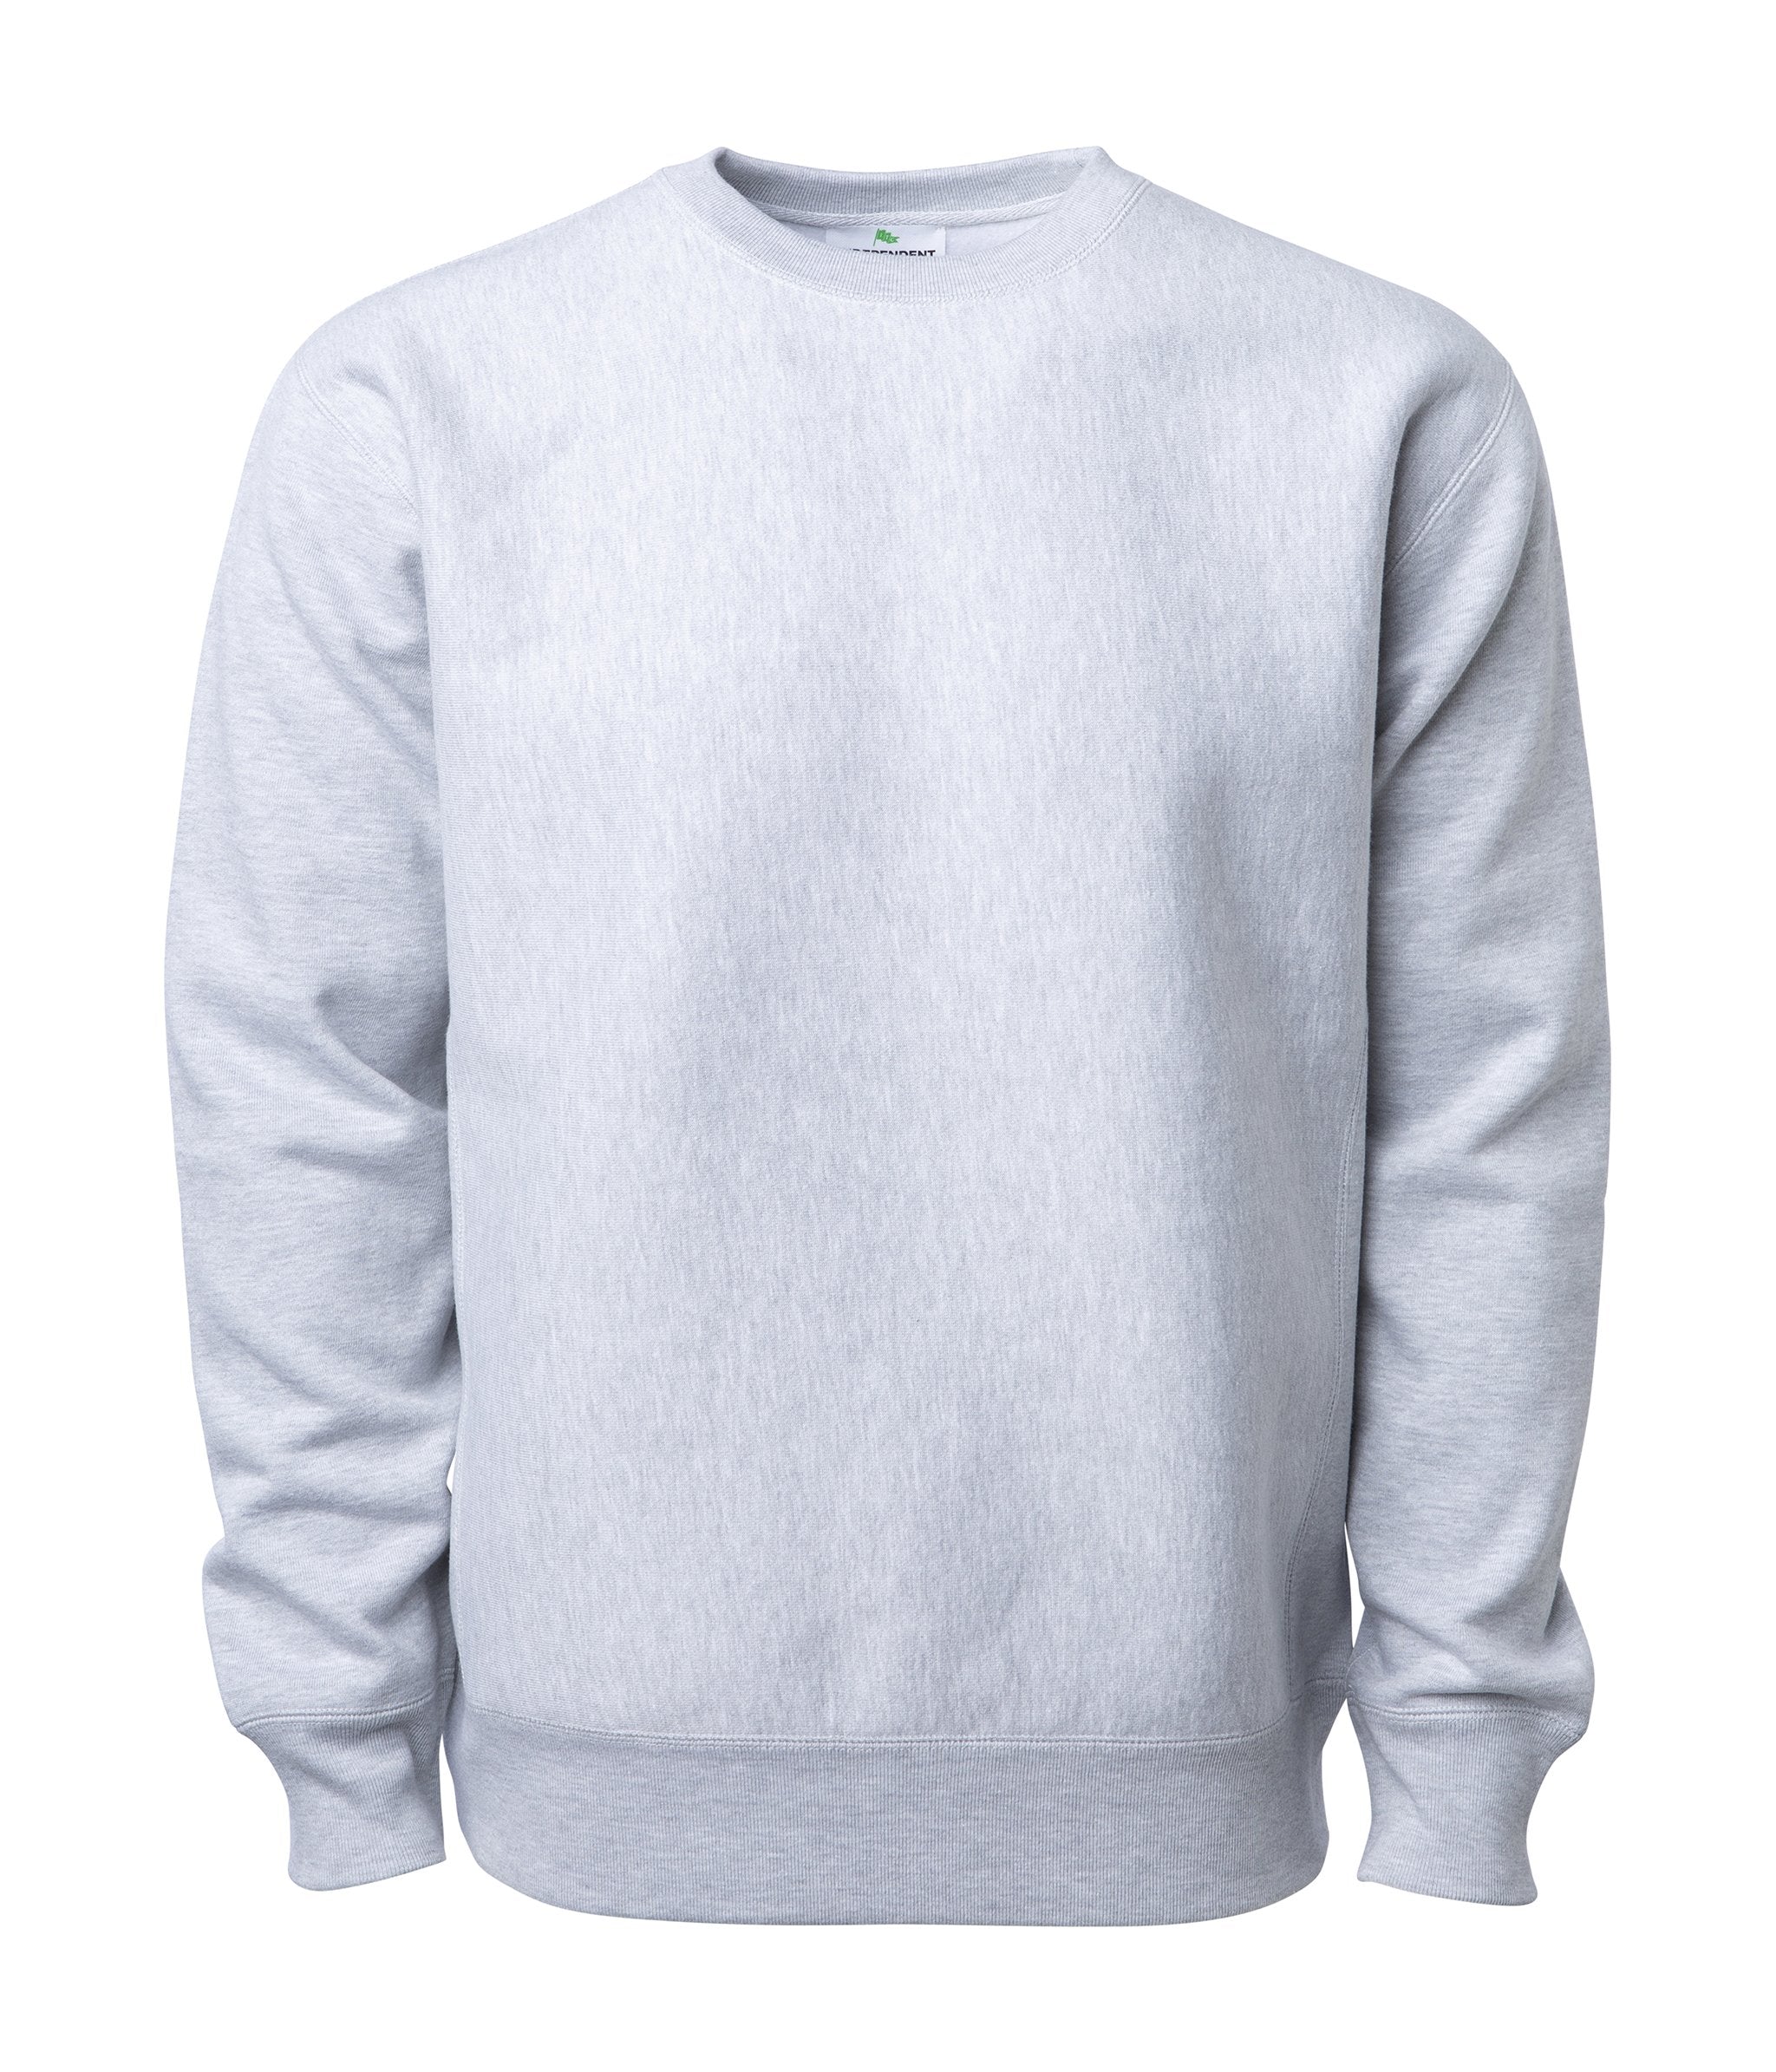 Mens Blank Sweatshirts, Jackets & Tees | Independent Trading Company